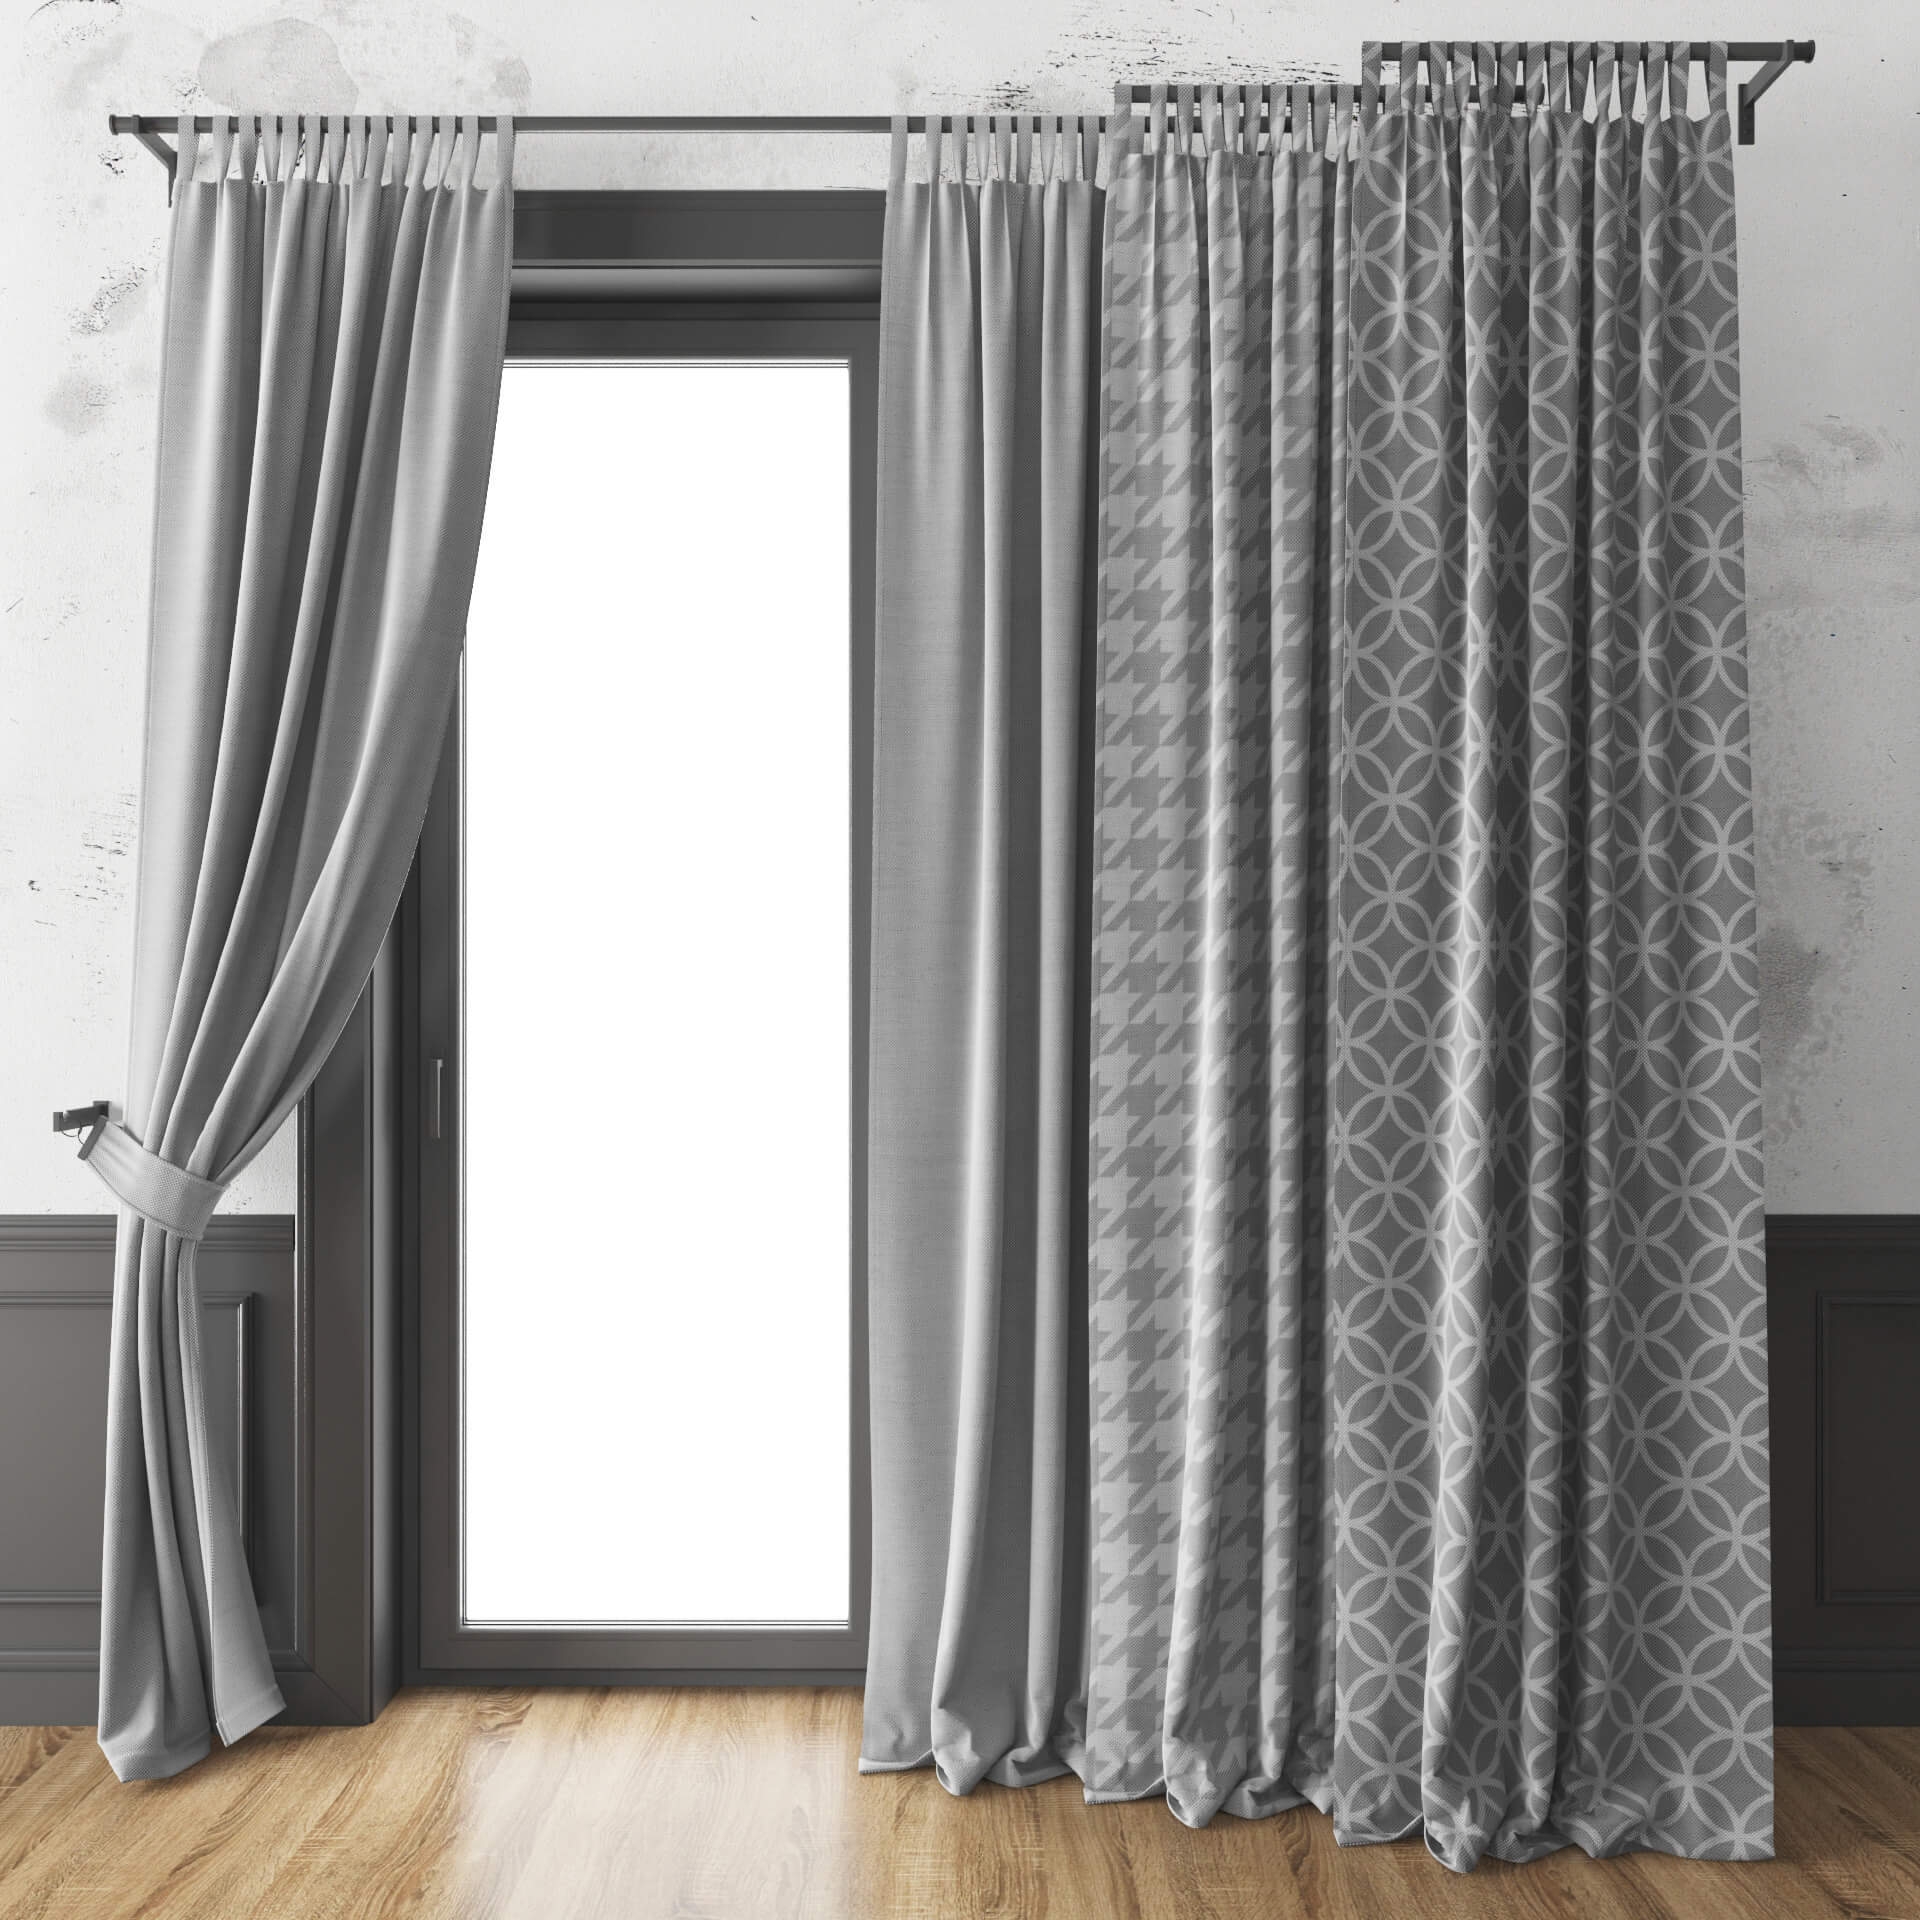 Curtain 09 - Download the 3D Model (15763) | zeelproject.com